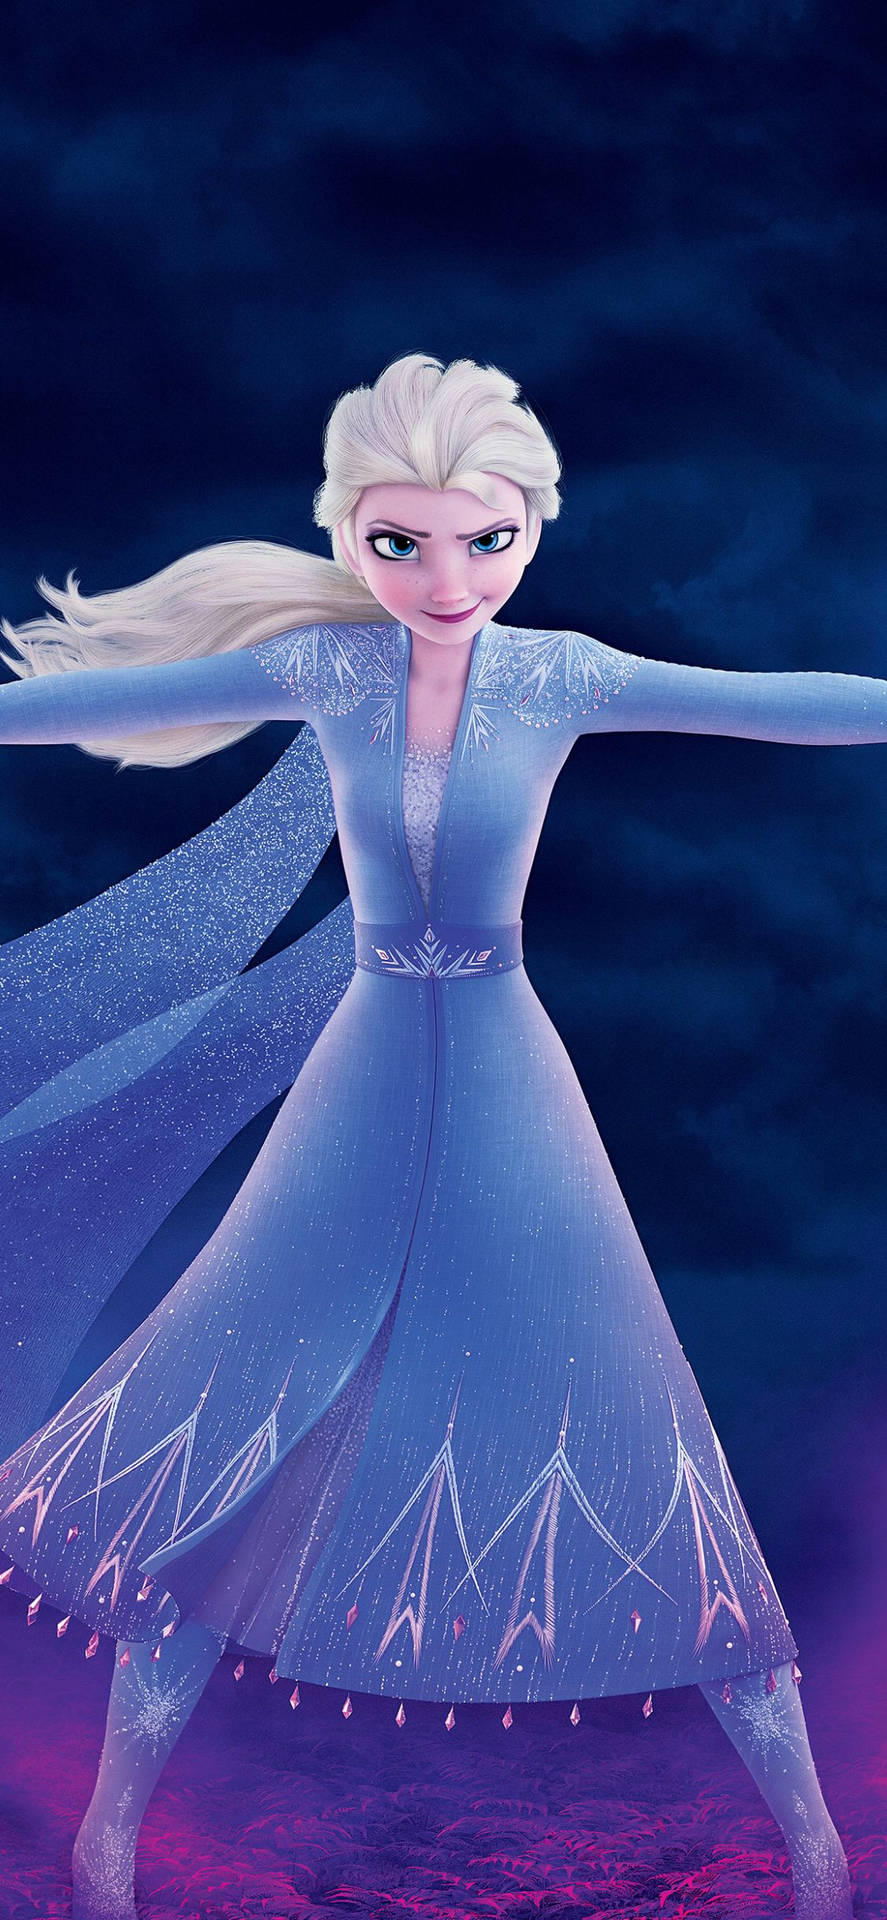 Elsa With Open Arms Frozen 2 Wallpaper